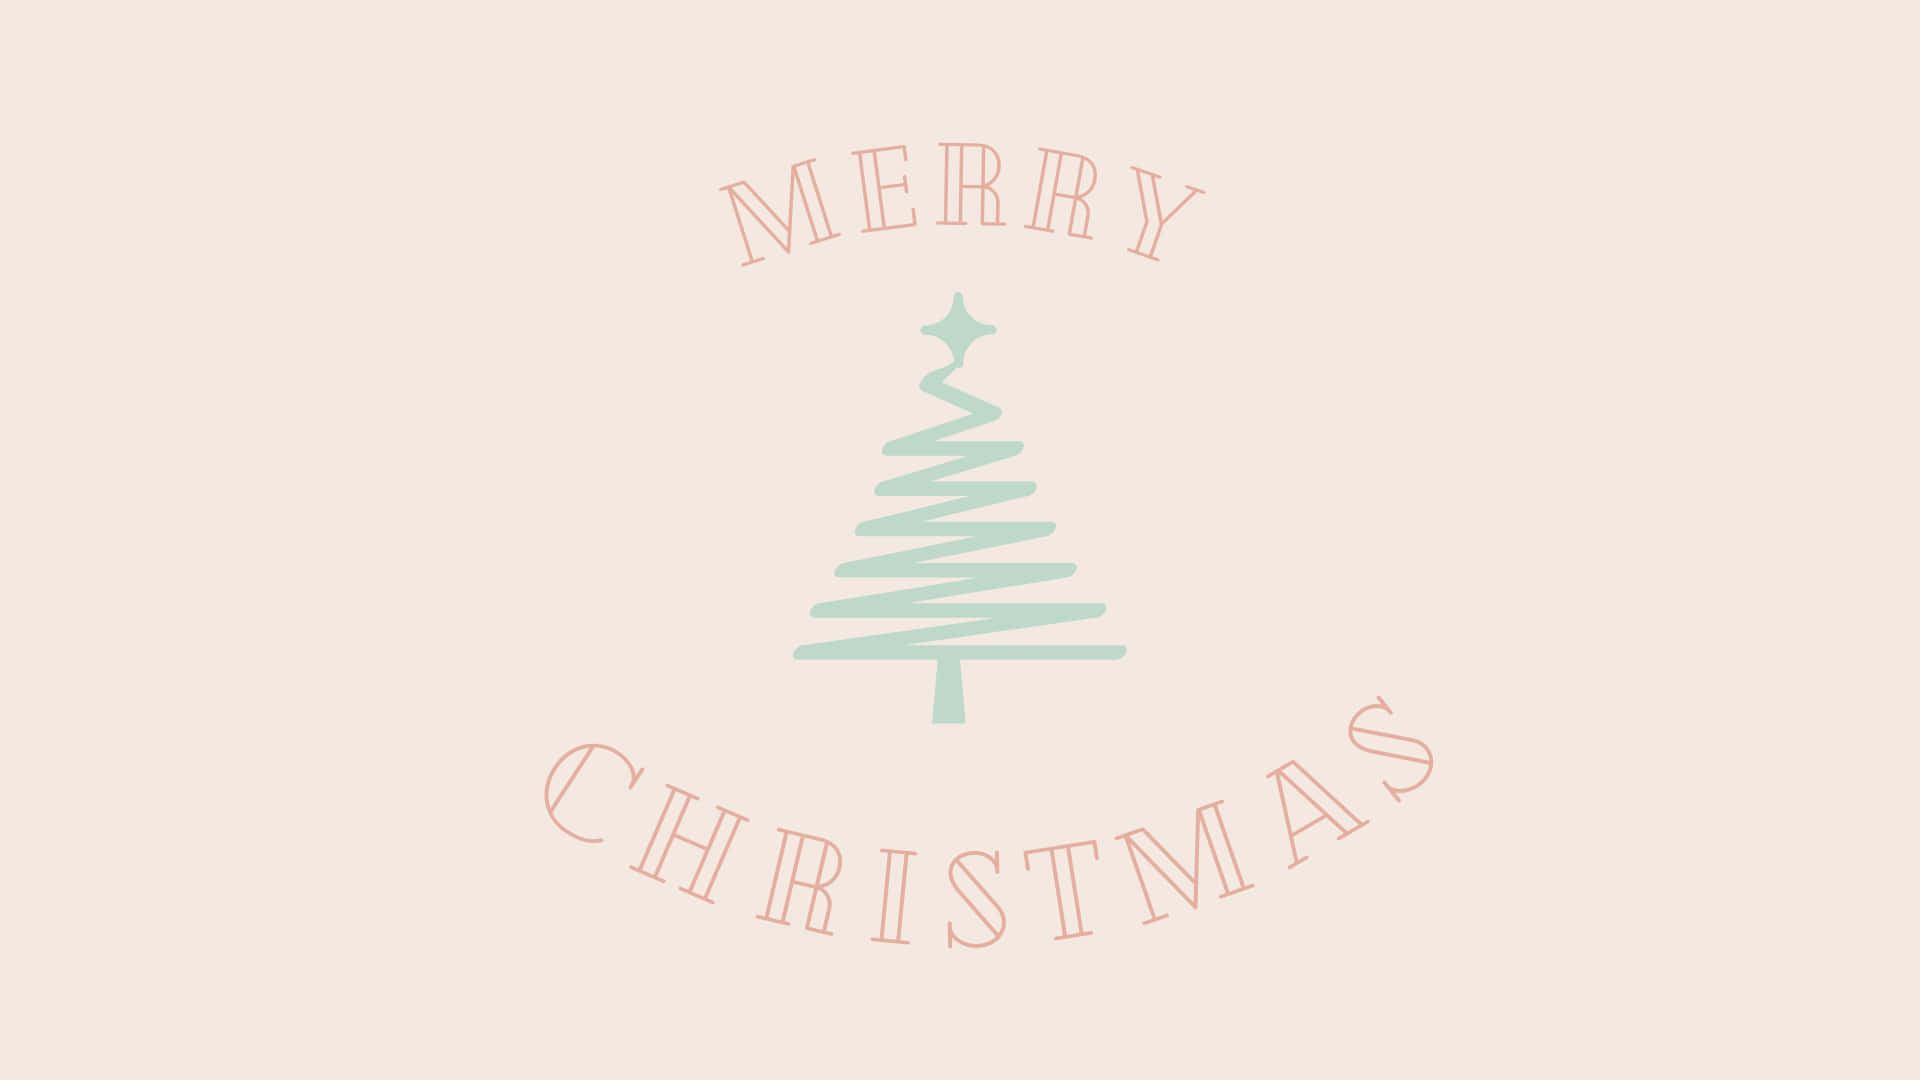 Pastel Aesthetic Christmas Greeting Digital Art Wallpaper